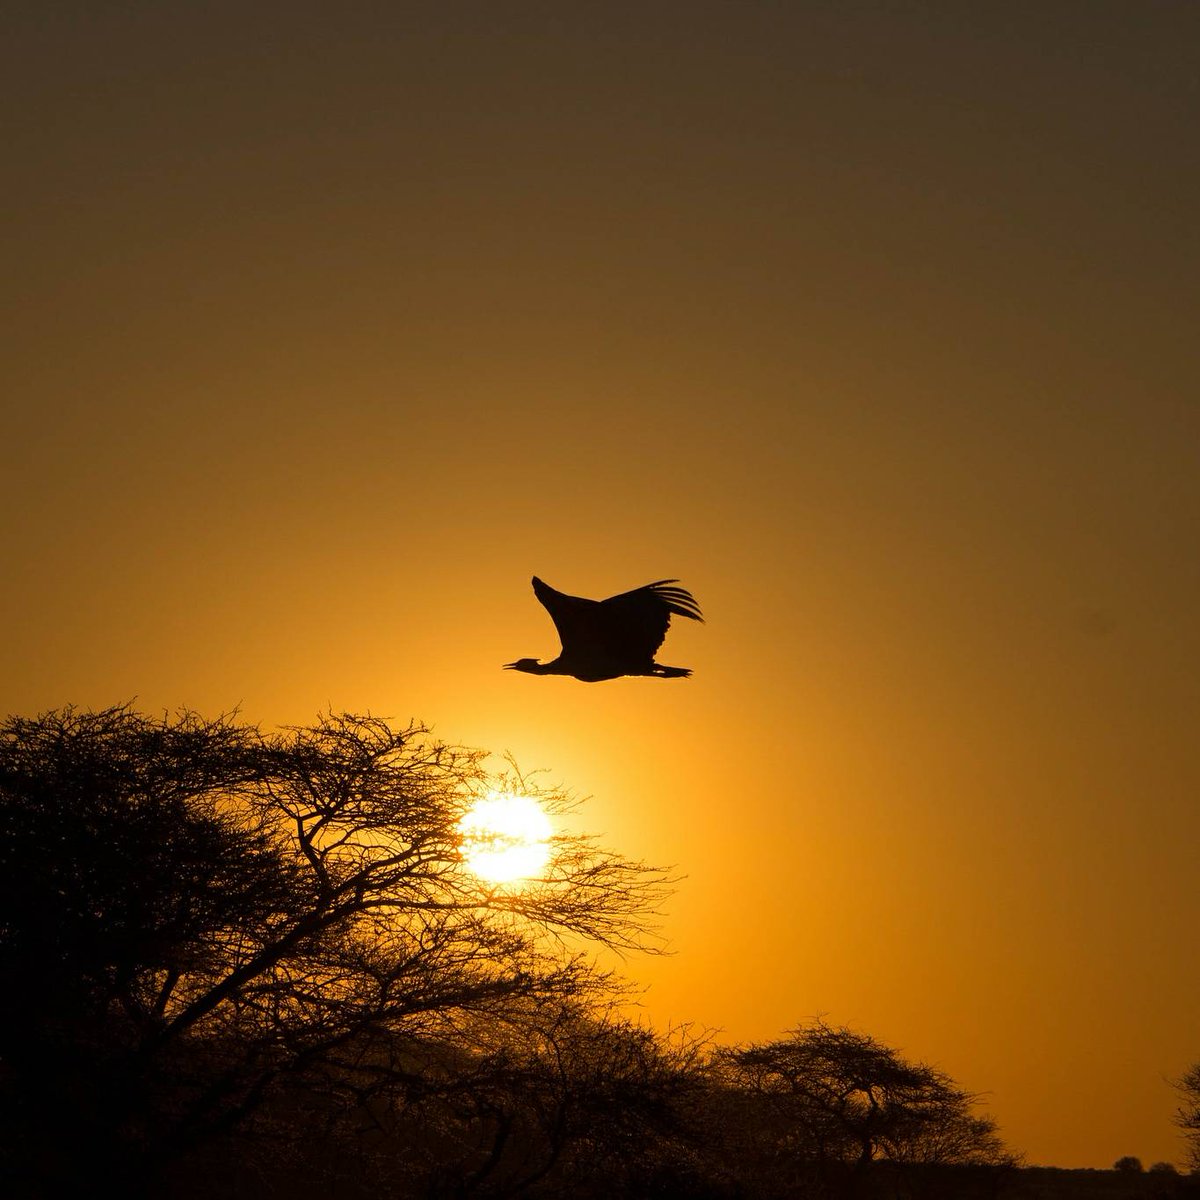 A Nxai Pan sunset for #SafariSunday. The bird is the national bird of Botswana - the Kori bustard. It is the largest flying bird native to Africa.

#botswana #safarisundat #nxaipan